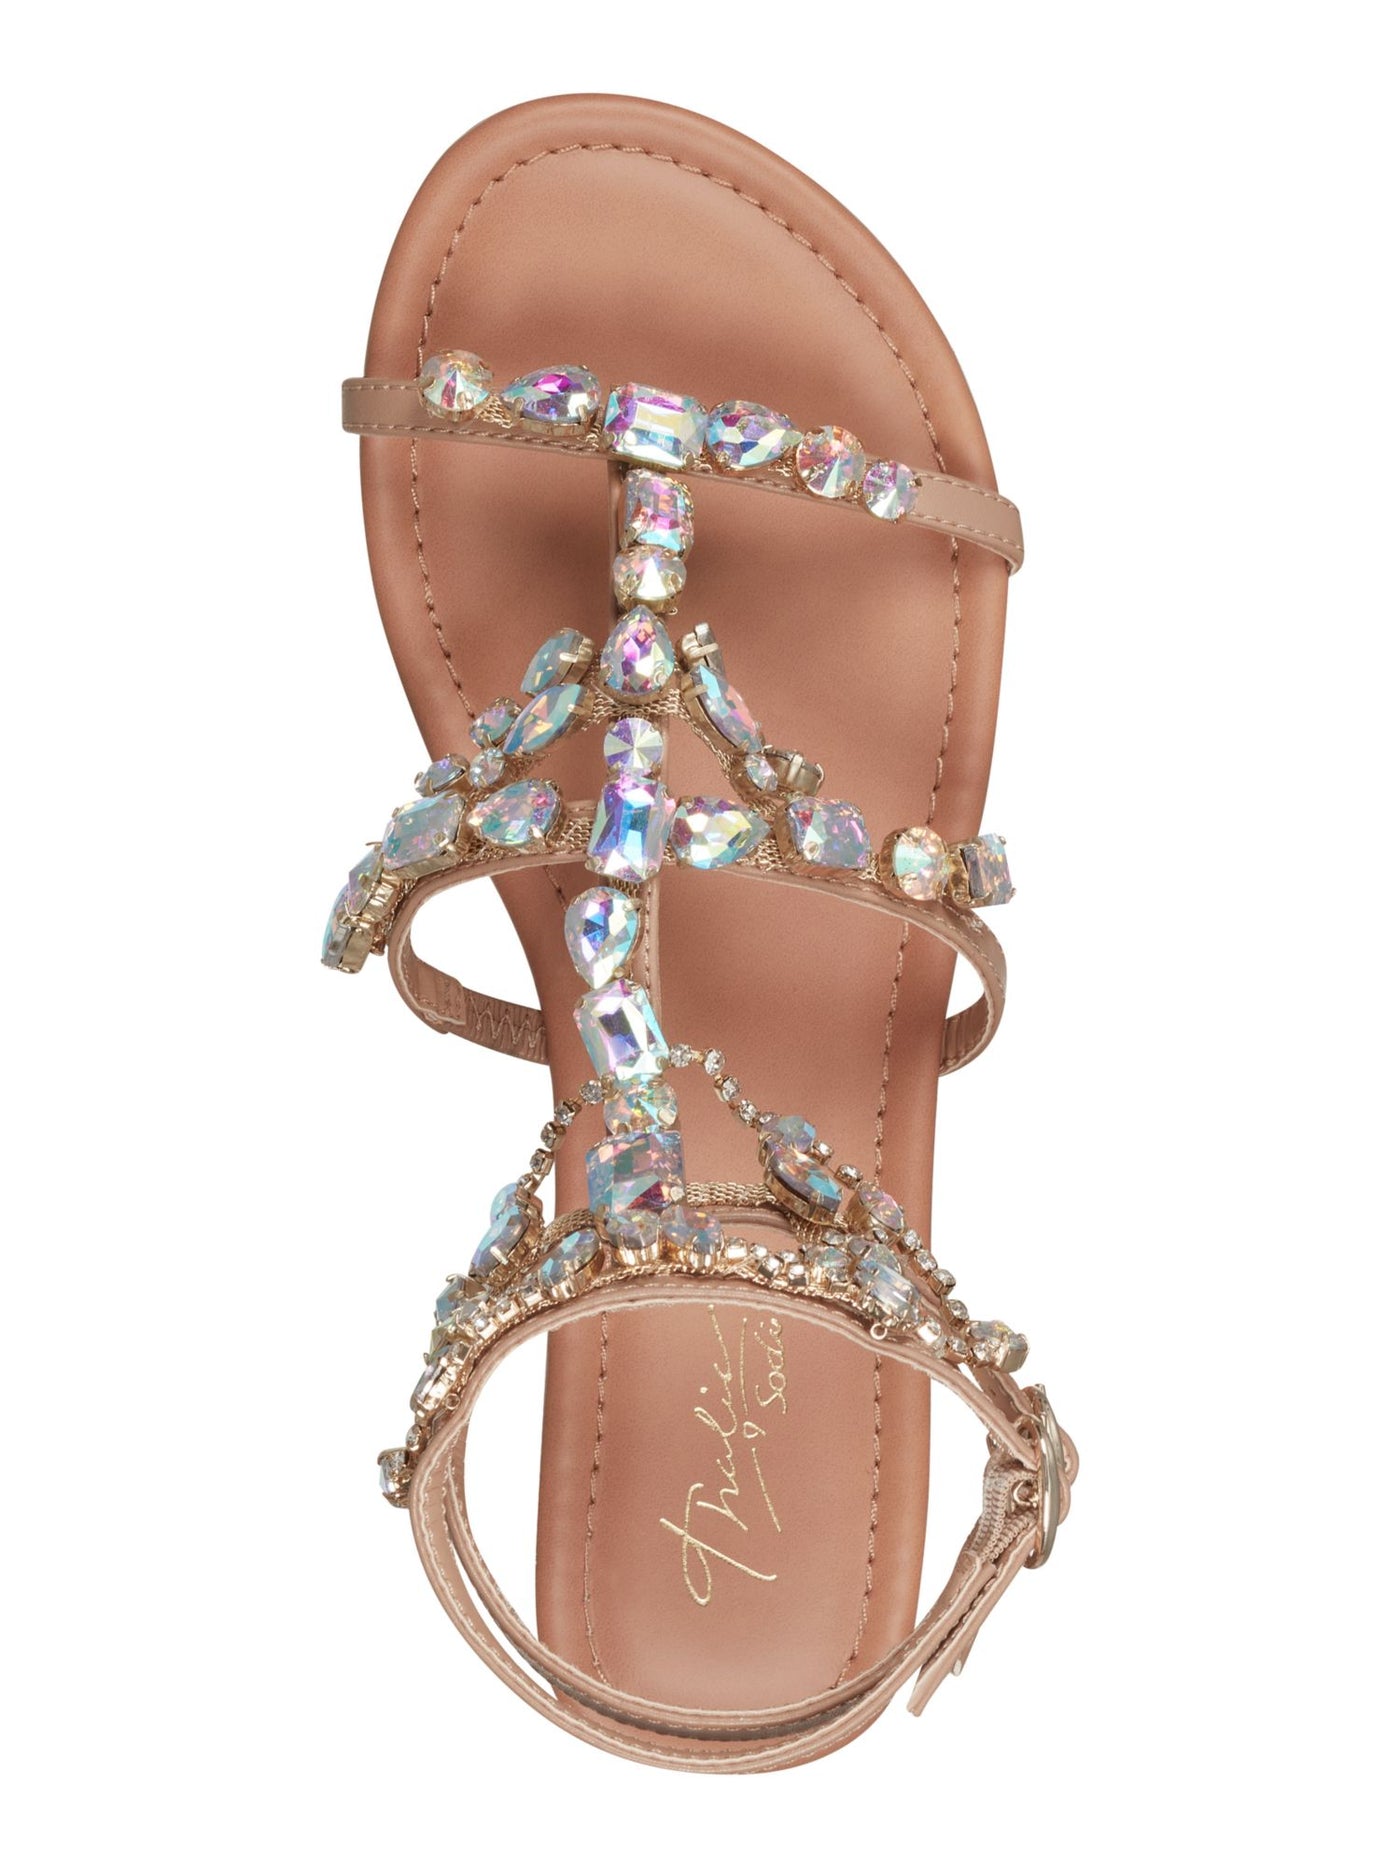 THALIA SODI Womens Beige Embellished T-Strap Jenesis Round Toe Buckle Gladiator Sandals Shoes 9.5 M